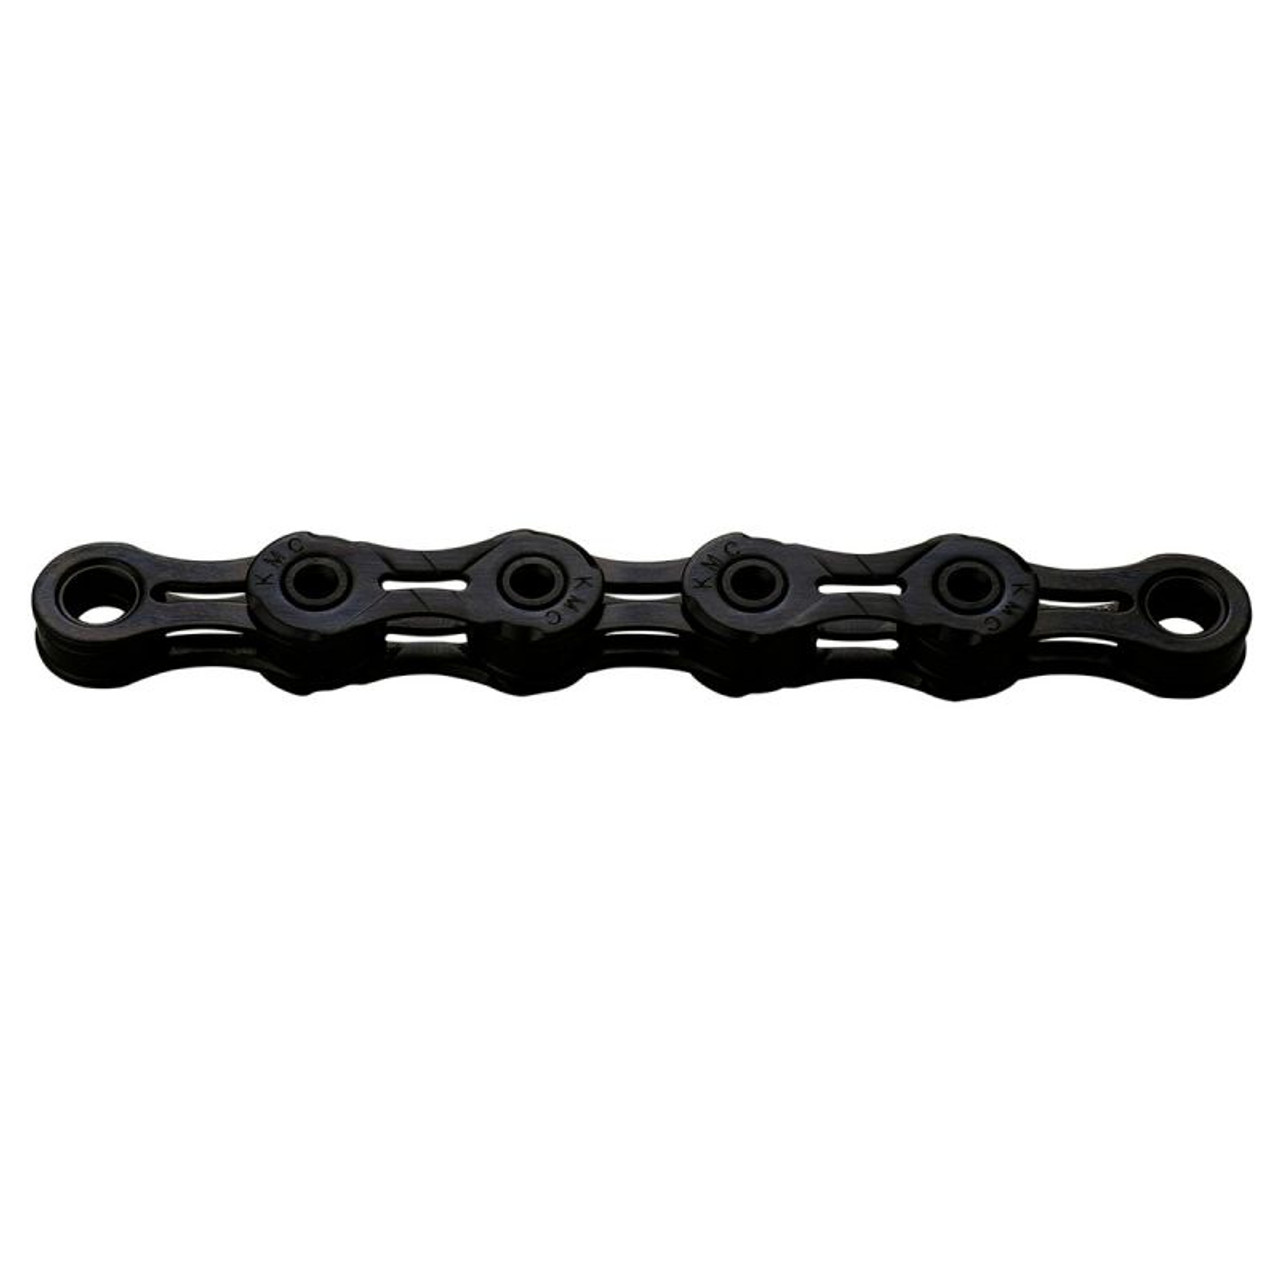 KMC X10 DLC 10 Speed Chain 116 Link All Black